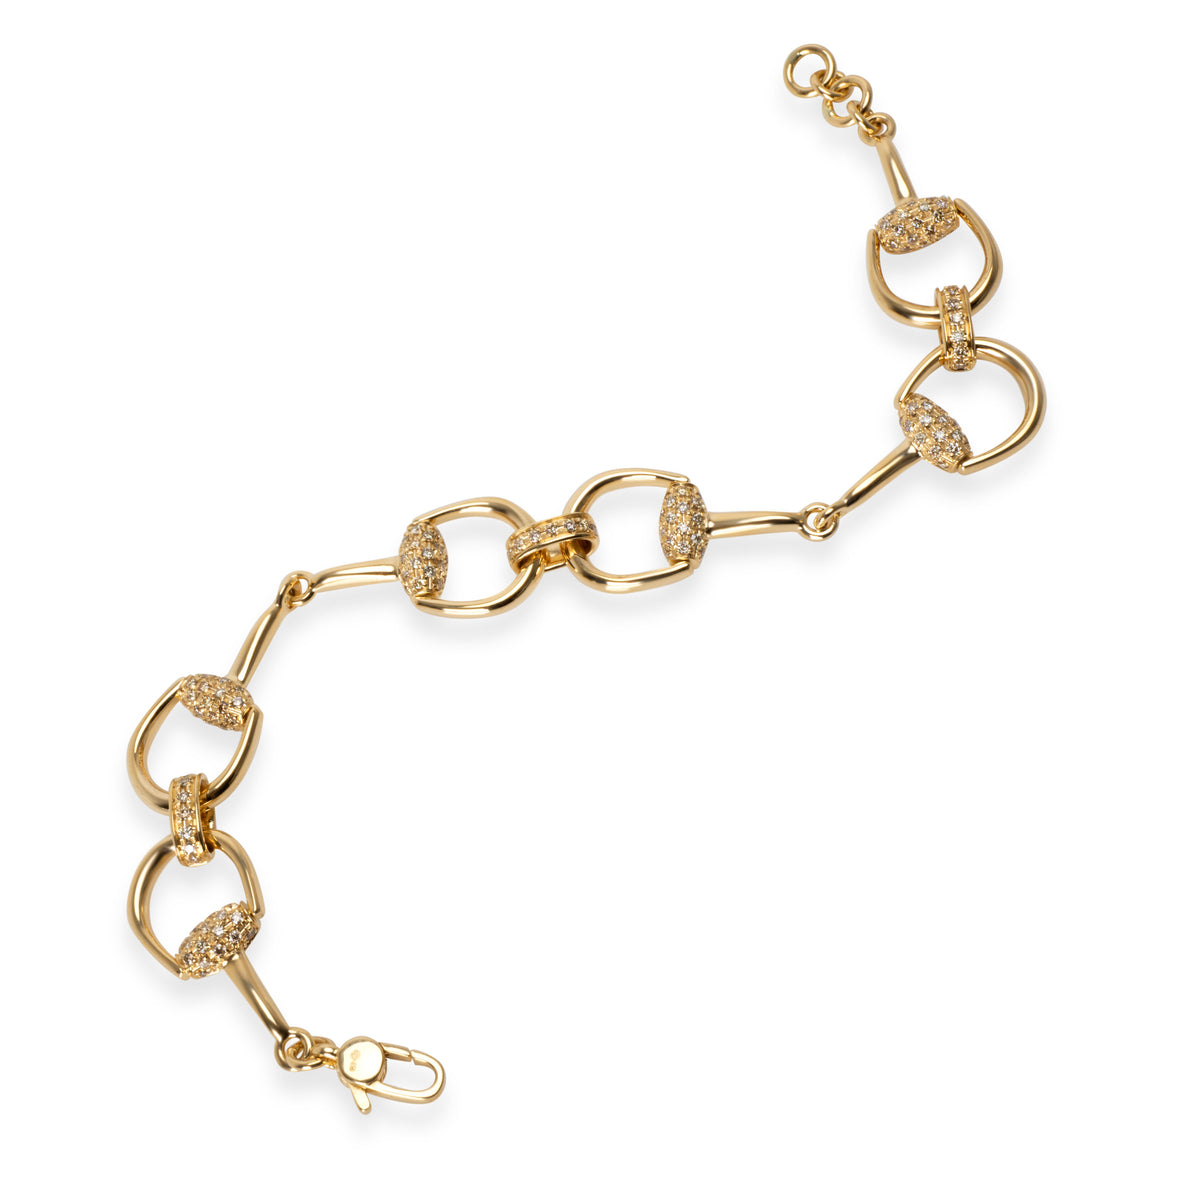 Gucci Horsebit Diamond  Bracelet in 18K Yellow Gold 1.04 CTW